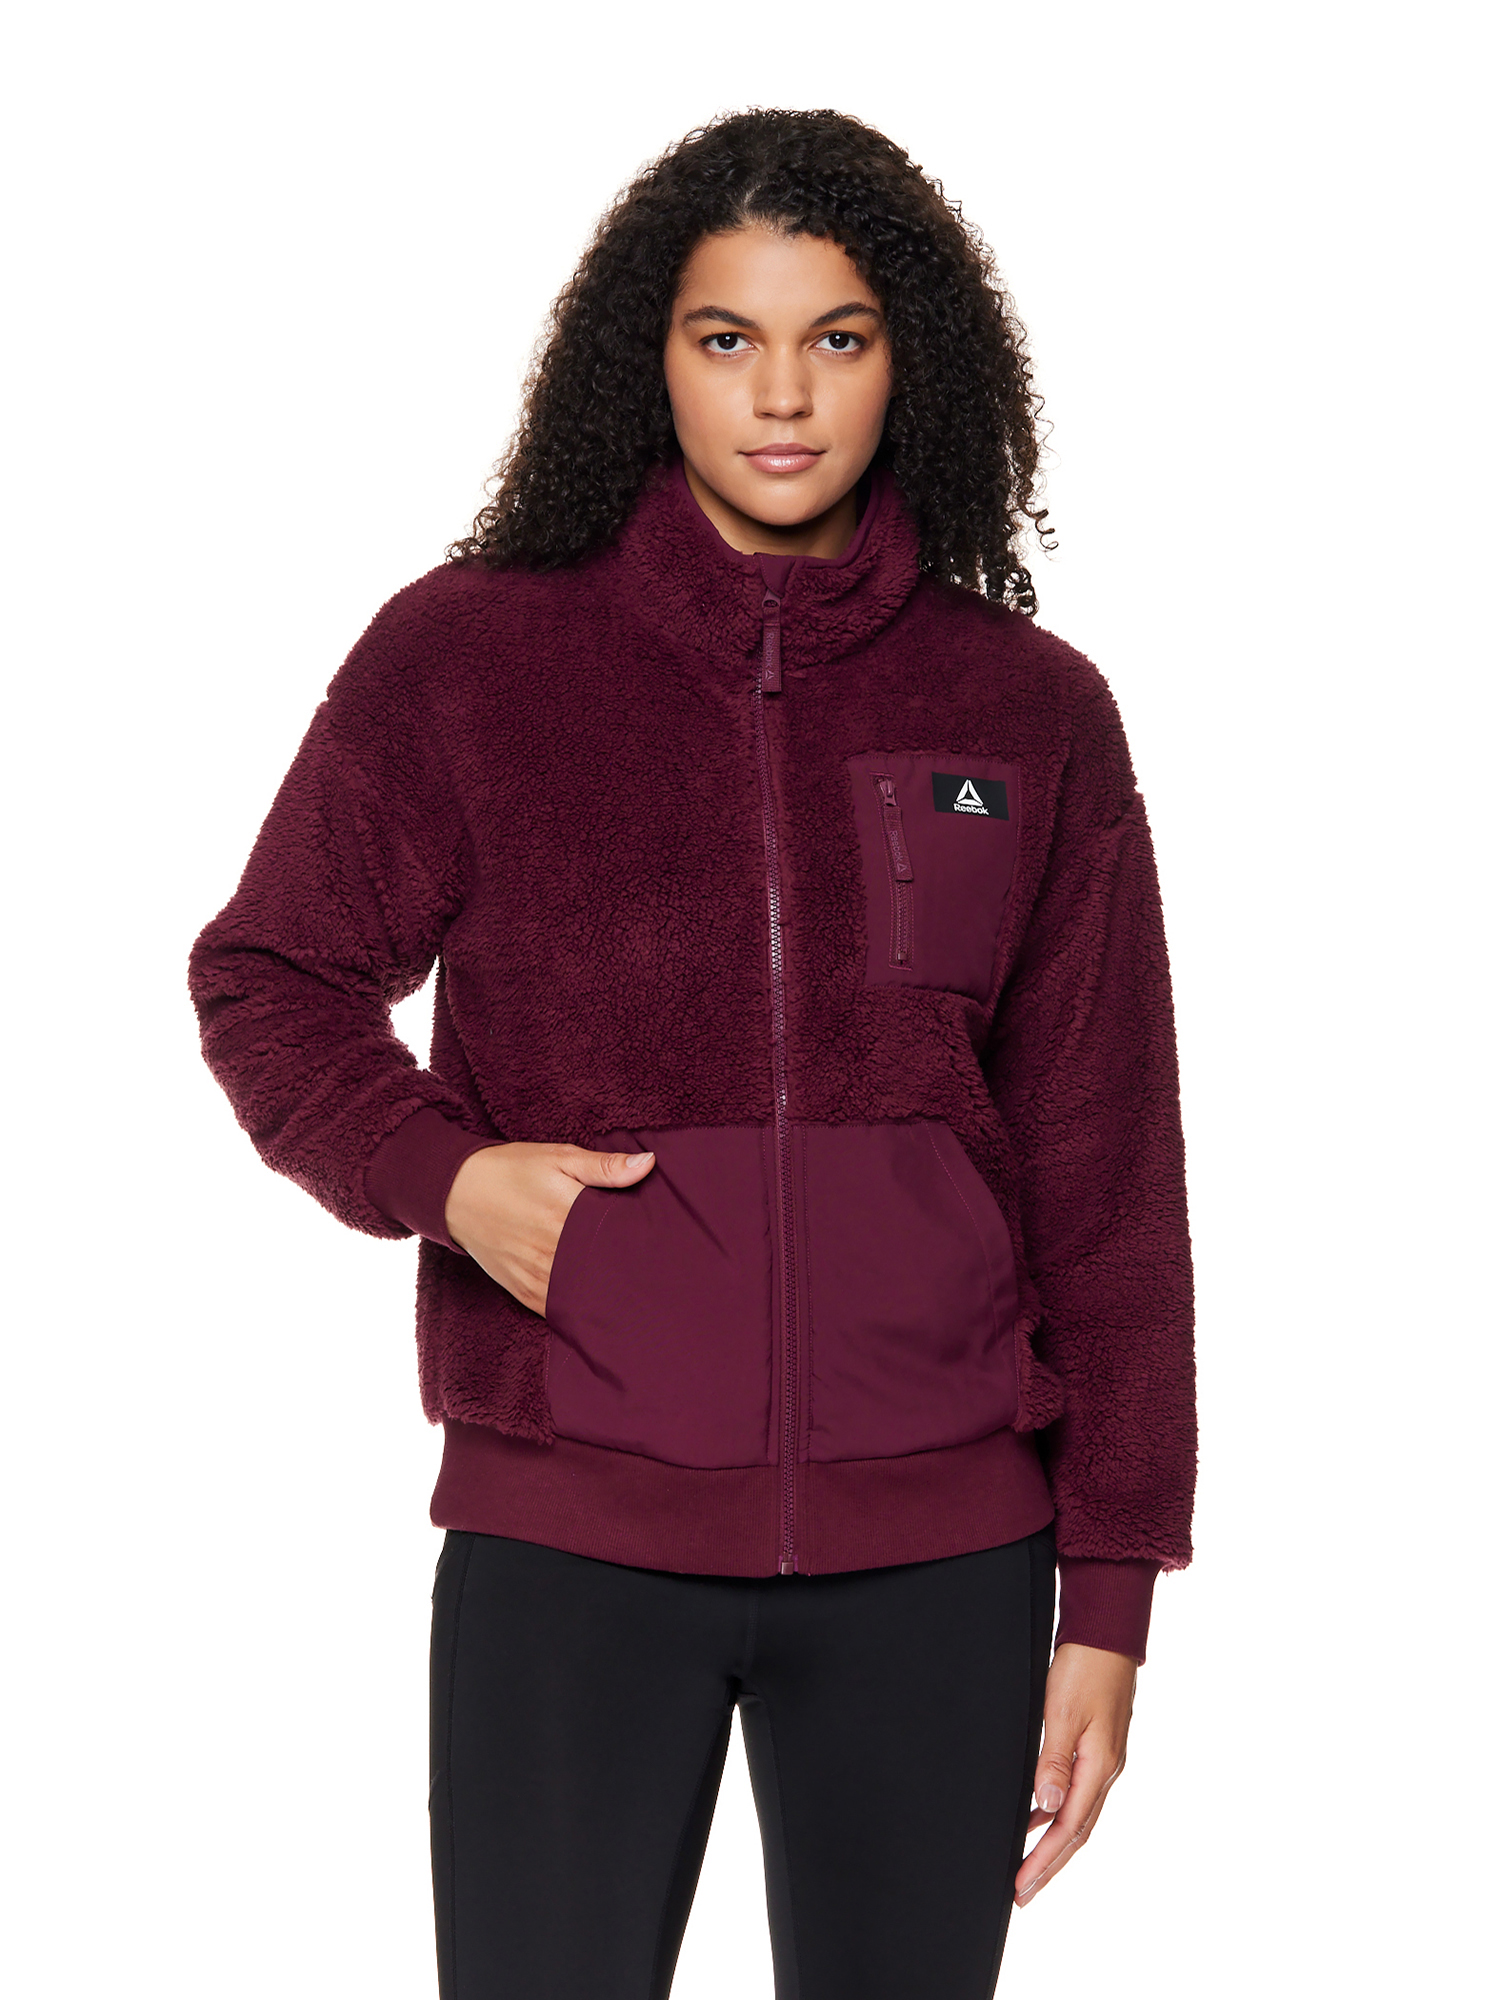 Reebok Women's Getaway Sherpa Jacket With Front Zipper Pocket - Walmart.com